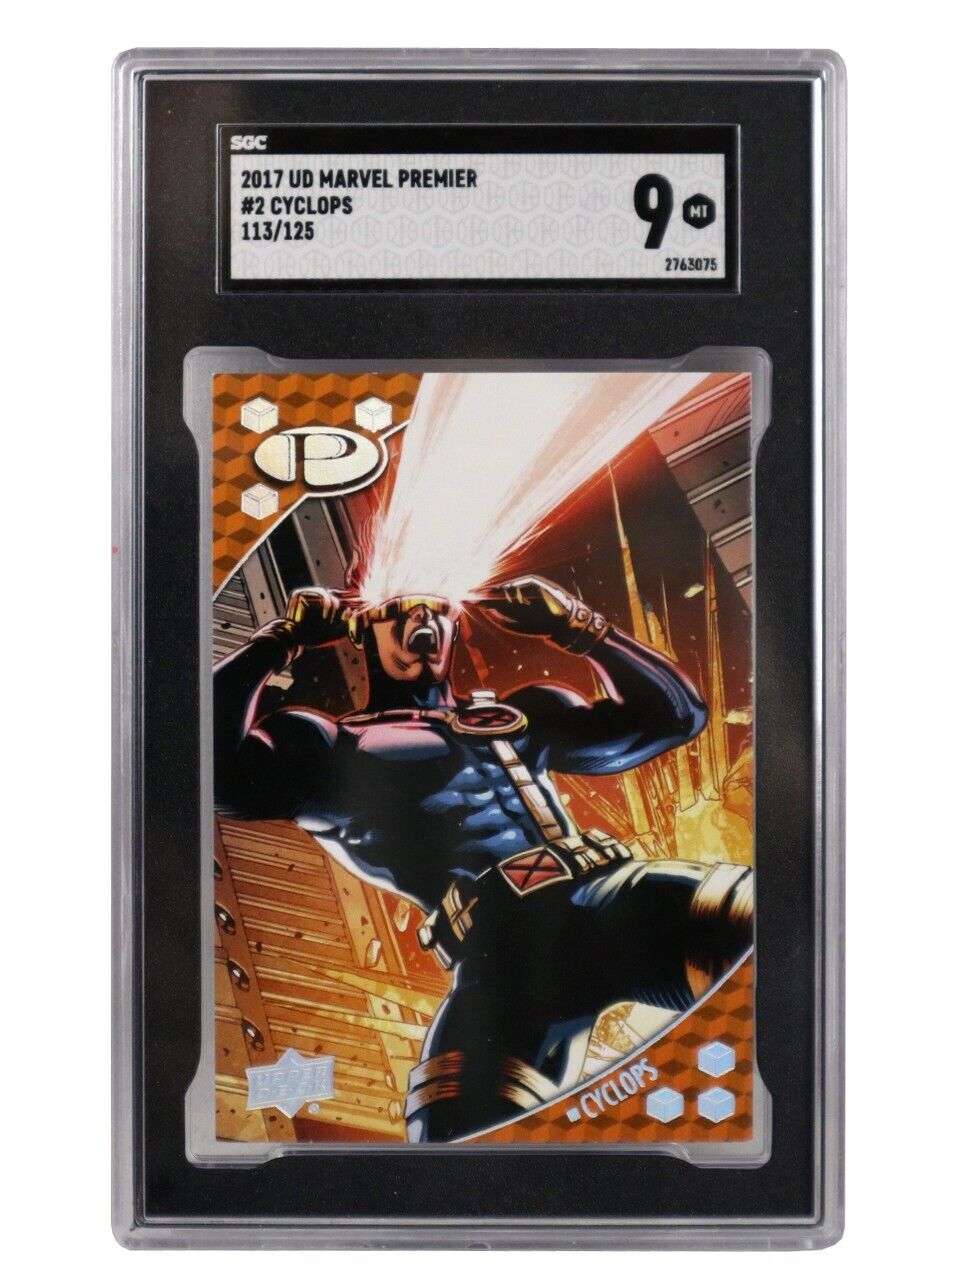 2017 Upper Deck Marvel Premier Cyclops Base Card #2 SGC 9 Mint 113/125